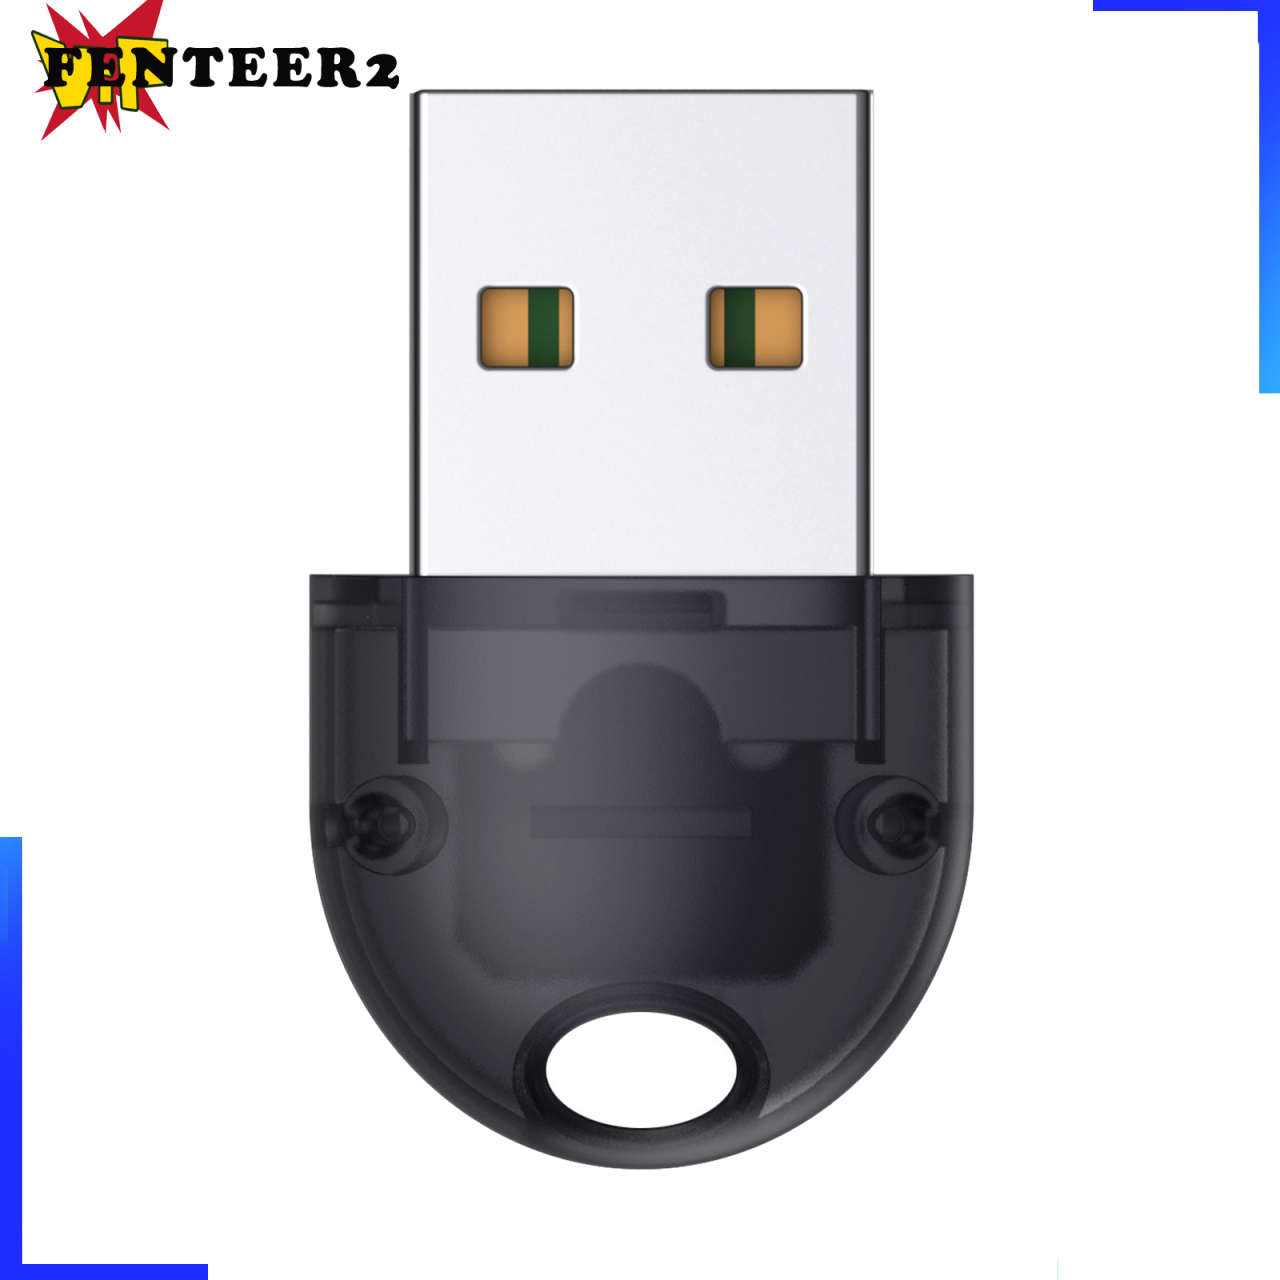 (Fenteer2 3c) Bluetooth Transmitter Mp3 Player Adapter Usb | BigBuy360 - bigbuy360.vn